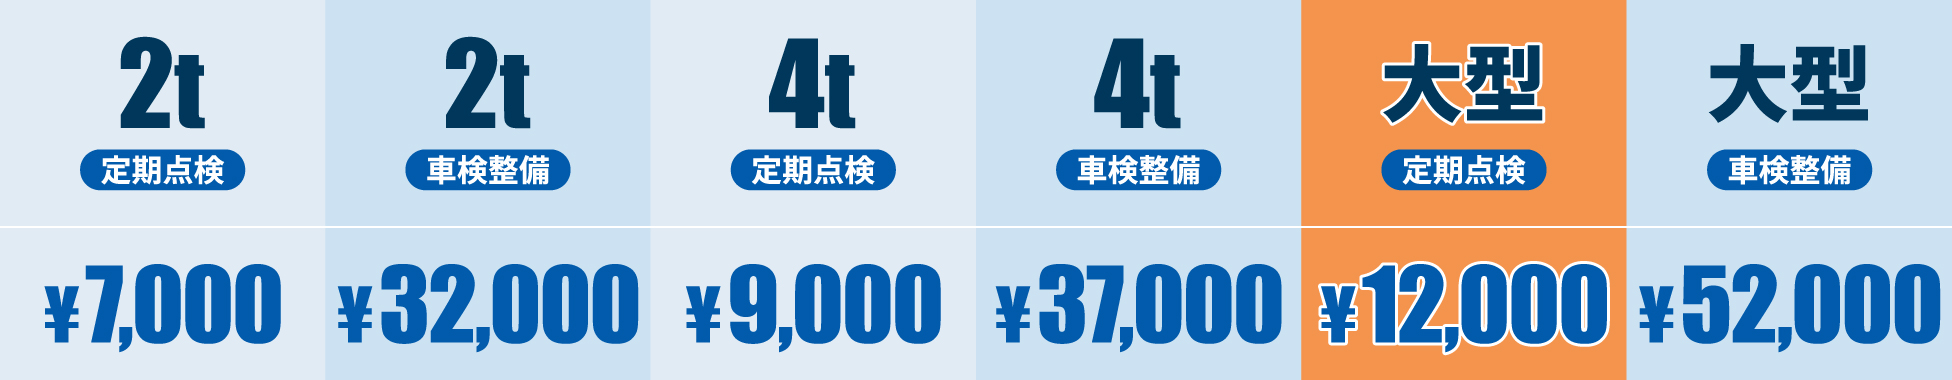 2t車定期点検¥7,000、2t車車検整備¥32,000、4t車定期点検¥9,000、4t車検整備¥37,000、大型車定期点検¥12,000、大型車車検整備¥52,000